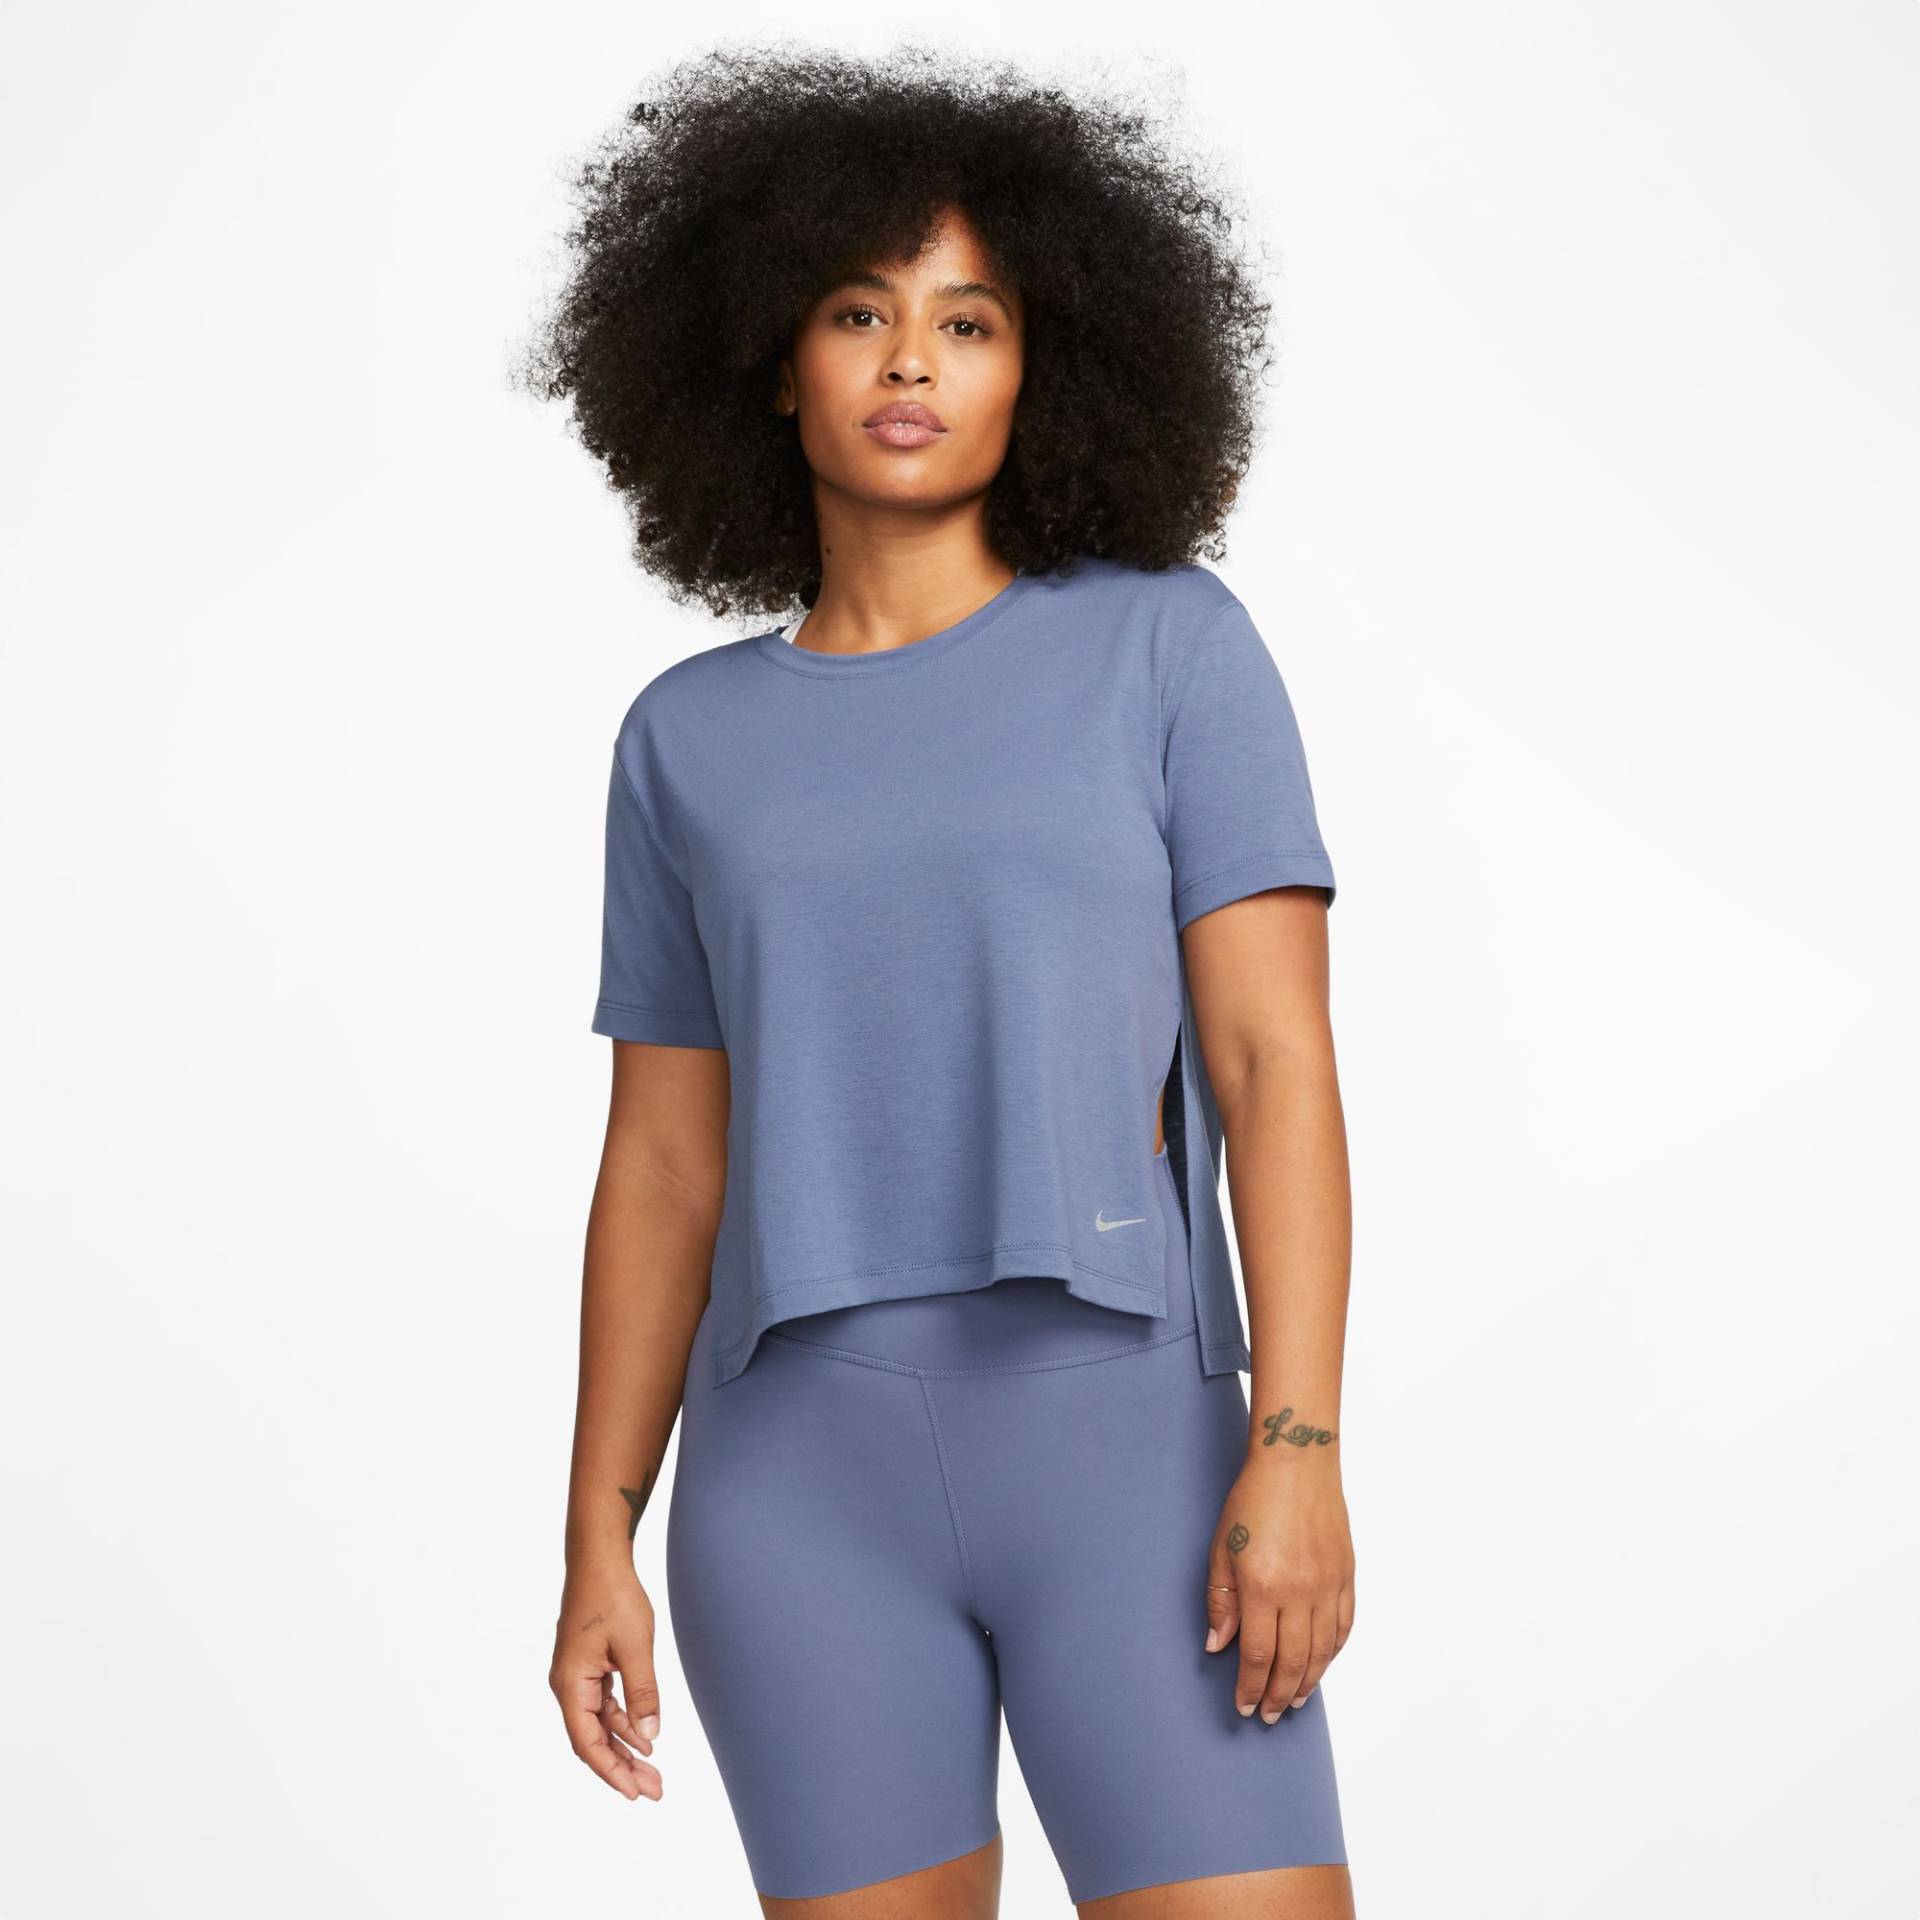 Nike Yogashirt »YOGA DRI-FIT WOMEN'S TOP« von Nike